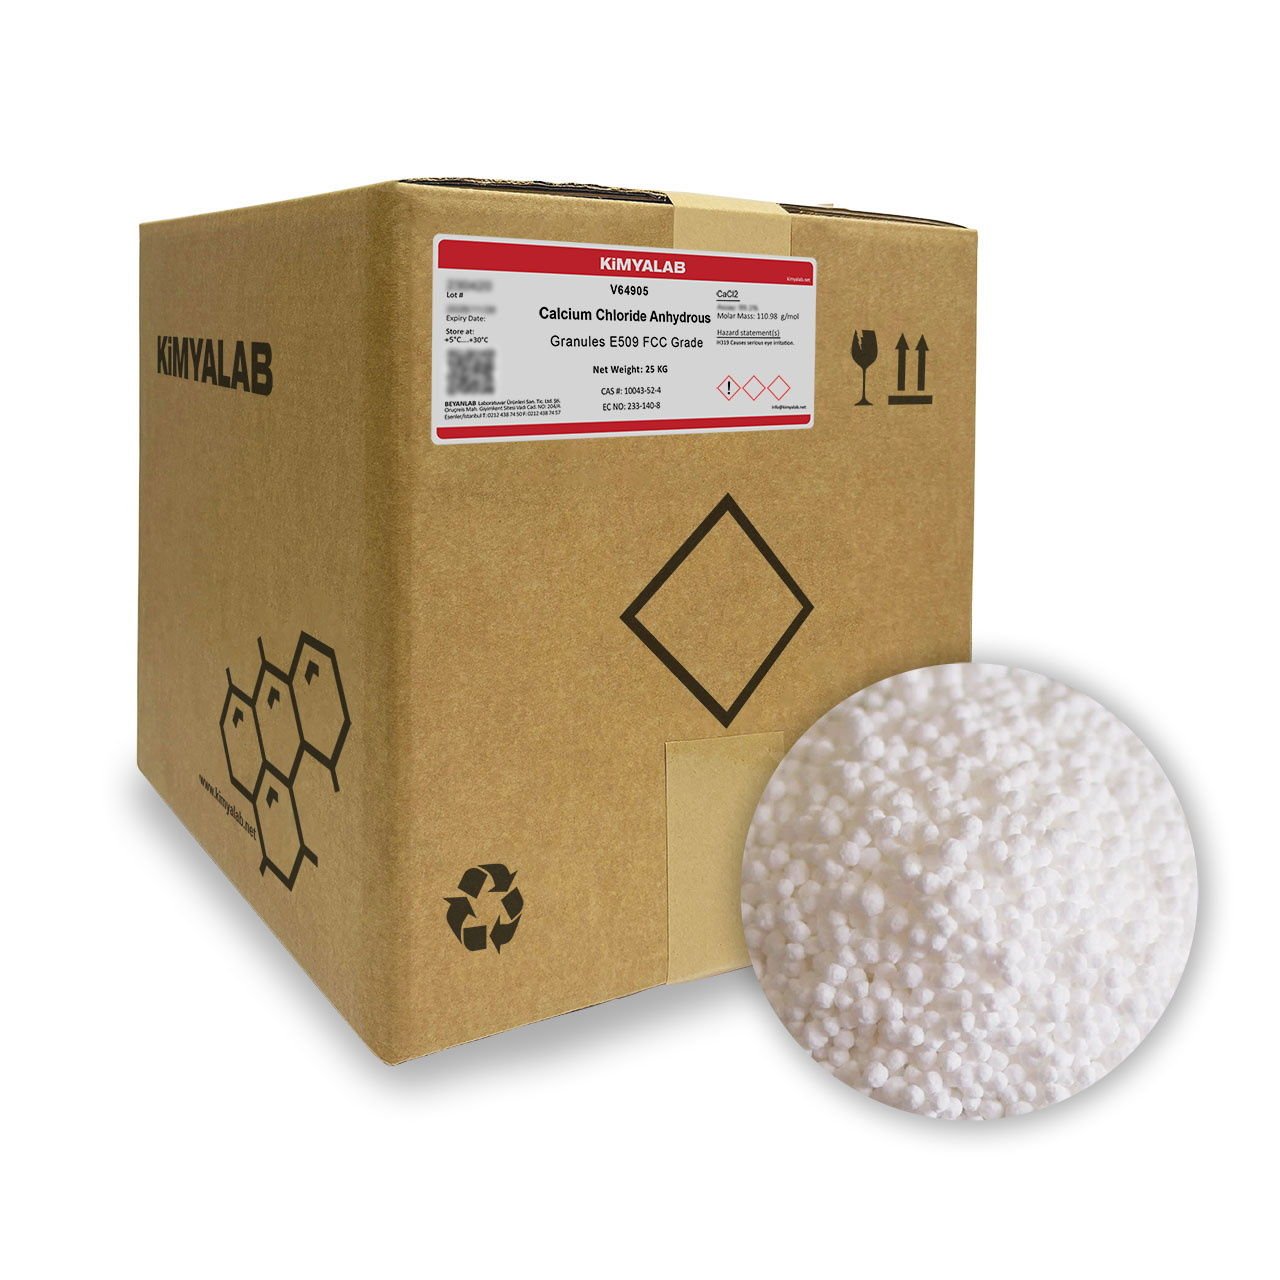 Kimyalab Kalsiyum Klorür Granül 94% - Calcium Chloride Anhydrous Food Grade 25 Kg-Koli Toptan